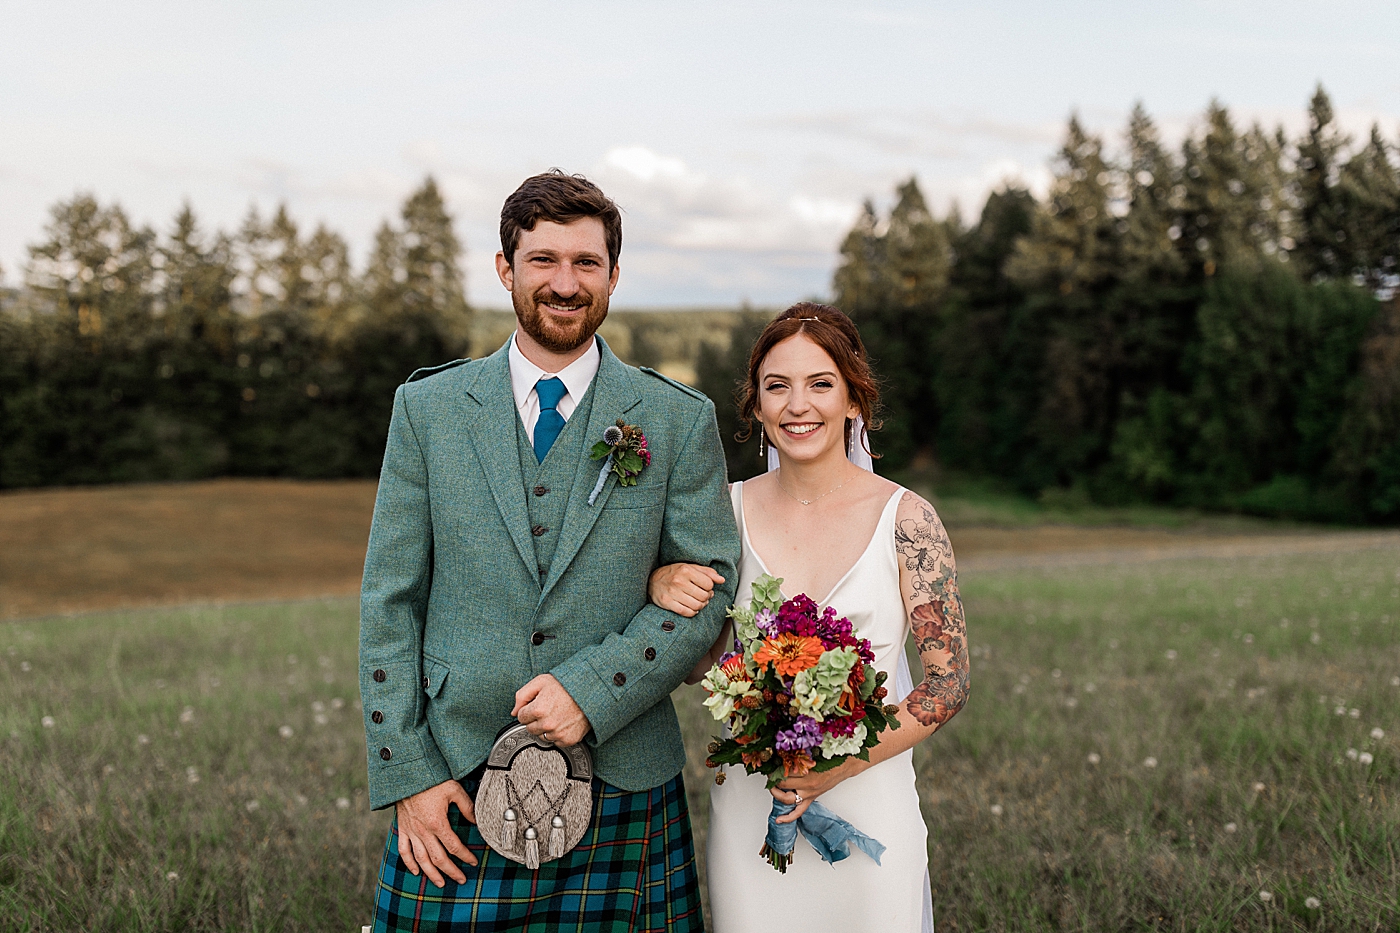 Bride and groom wedding portraits | Chehalis Wedding Photographer, Megan Montalvo Photography